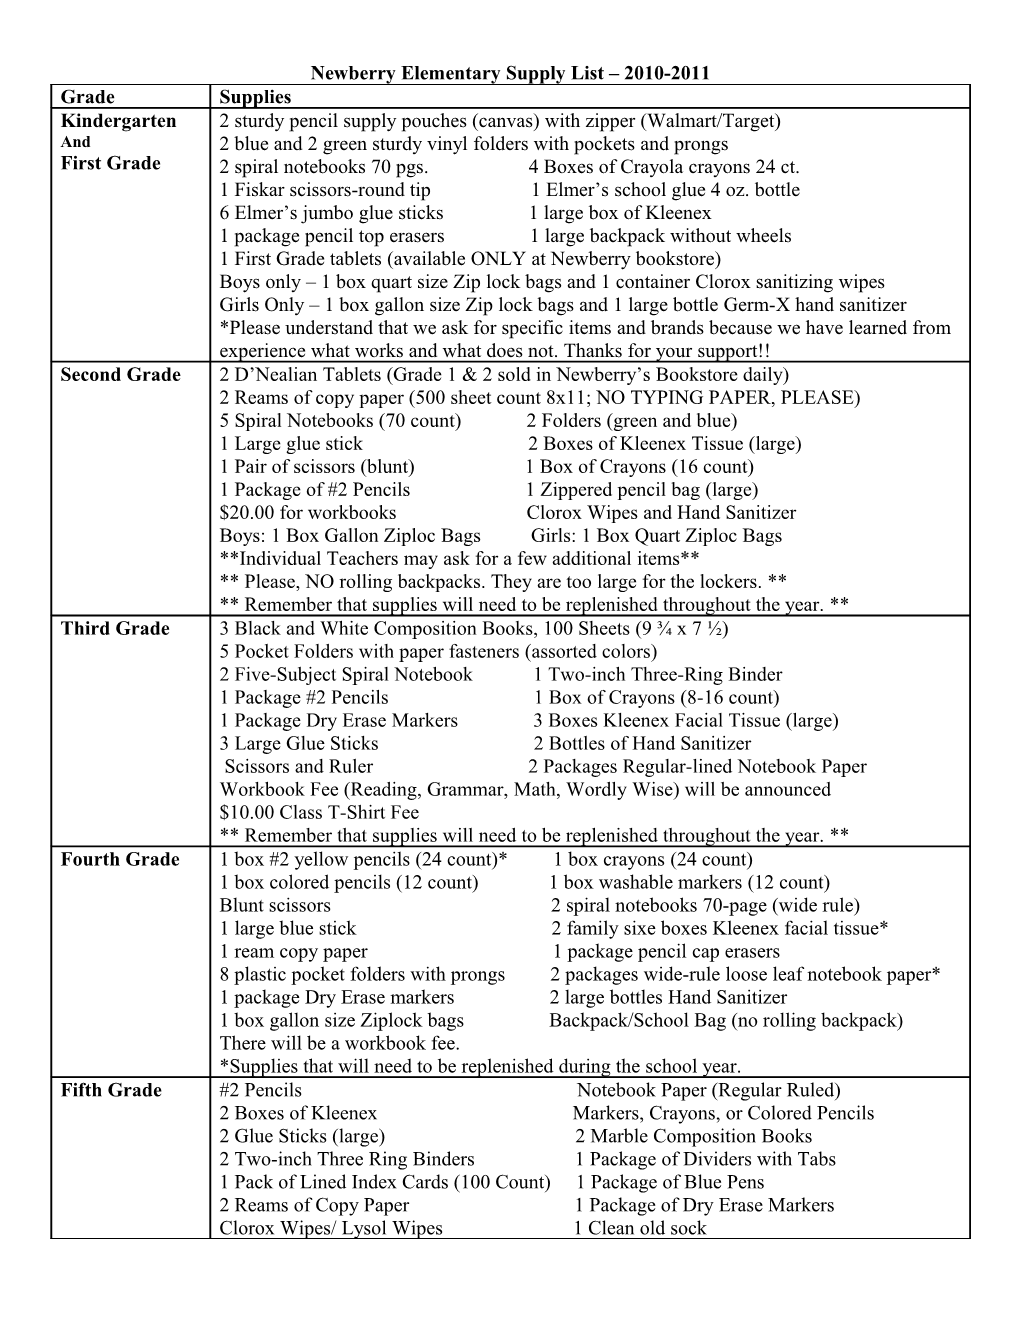 Newberry Elementary Supply List 2010-2011